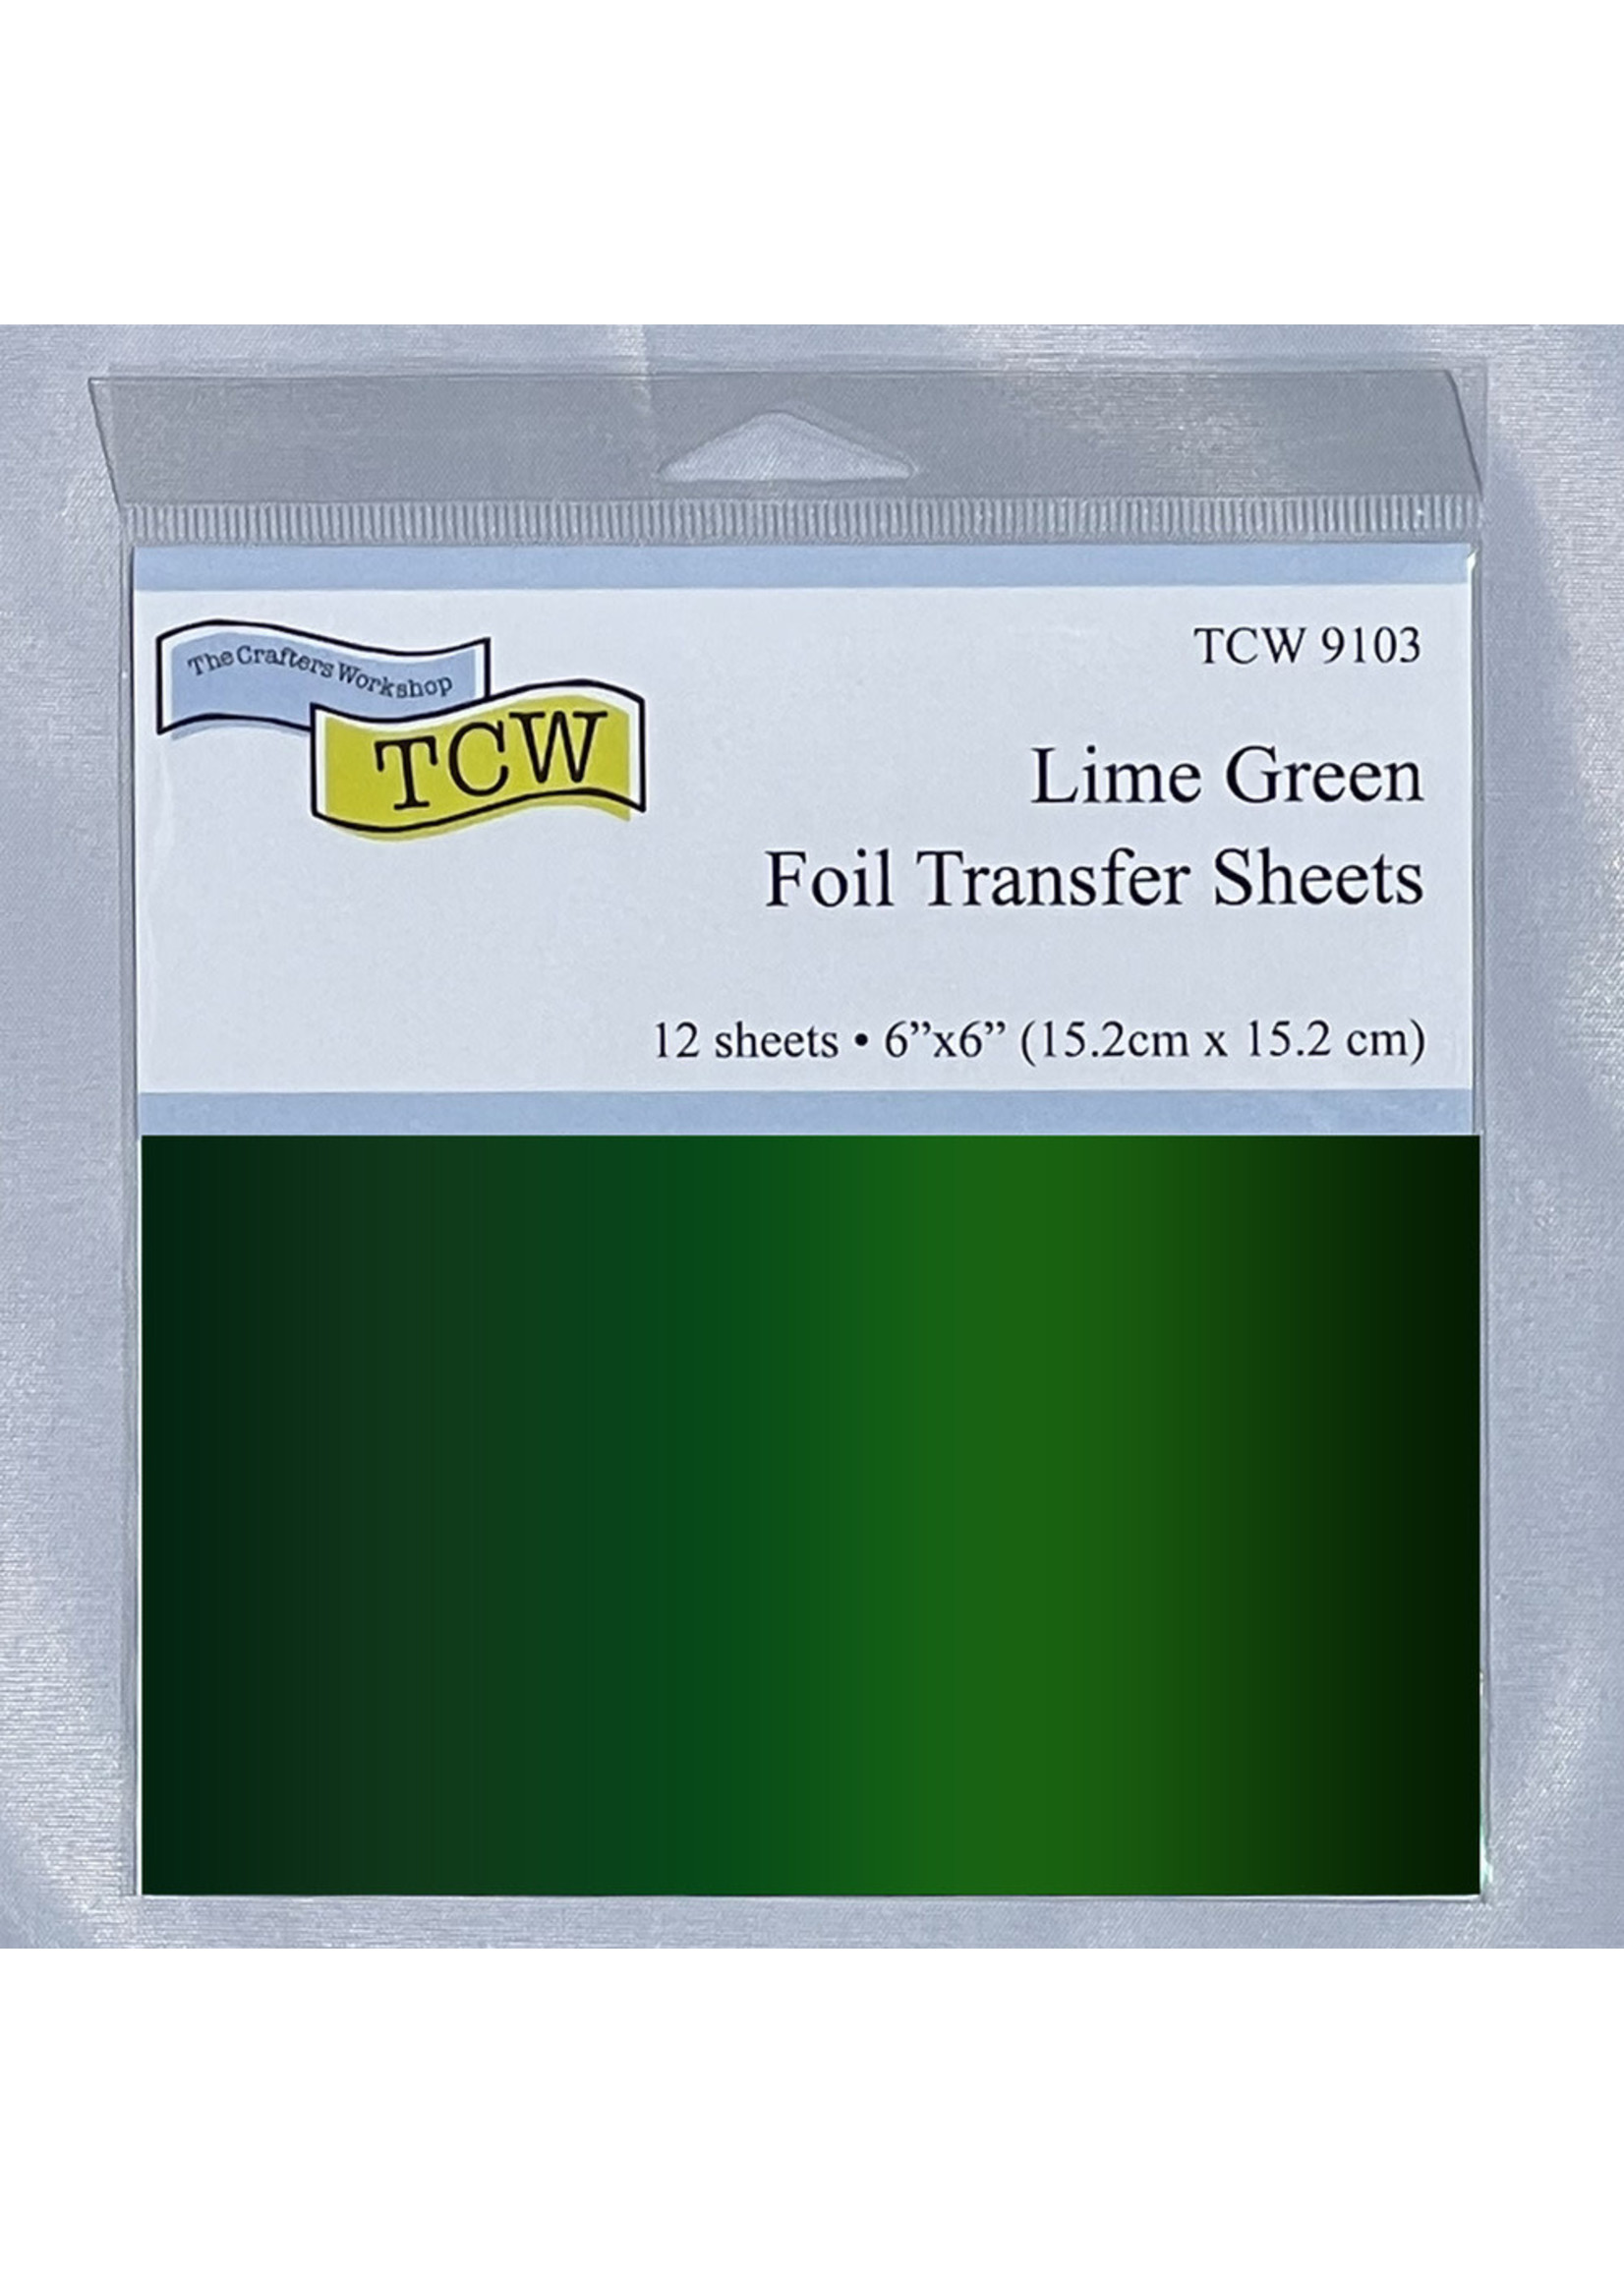 TCW Foil Transfer Sheets 6x6, Lime Green (12)